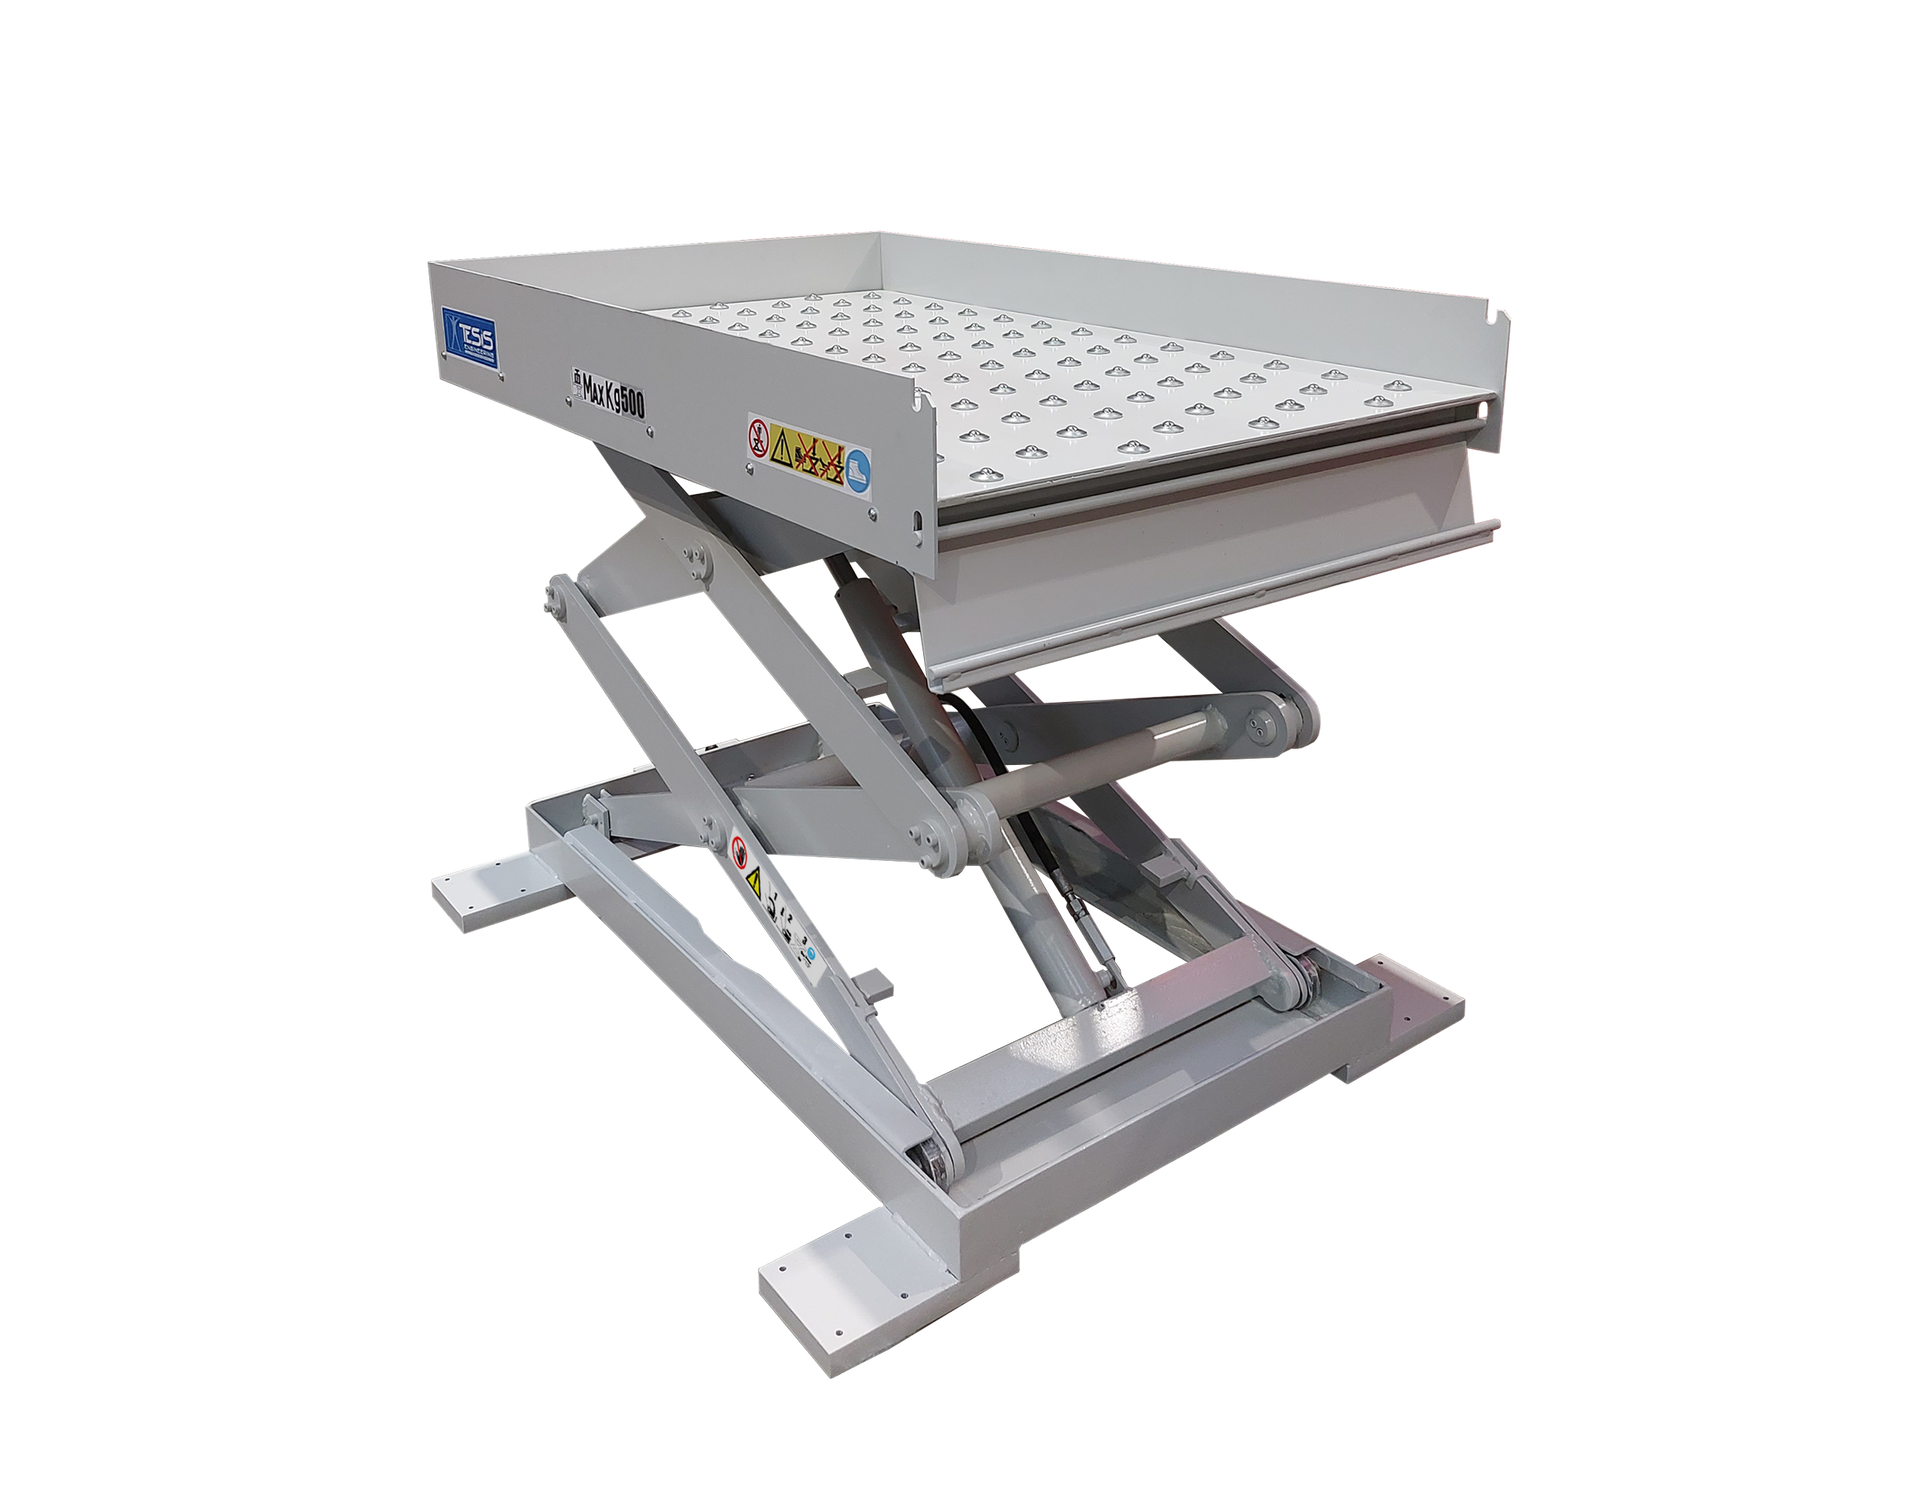 Ball transfer conveyor lift table, scissor lift table with ball transfer top, roller ball lift